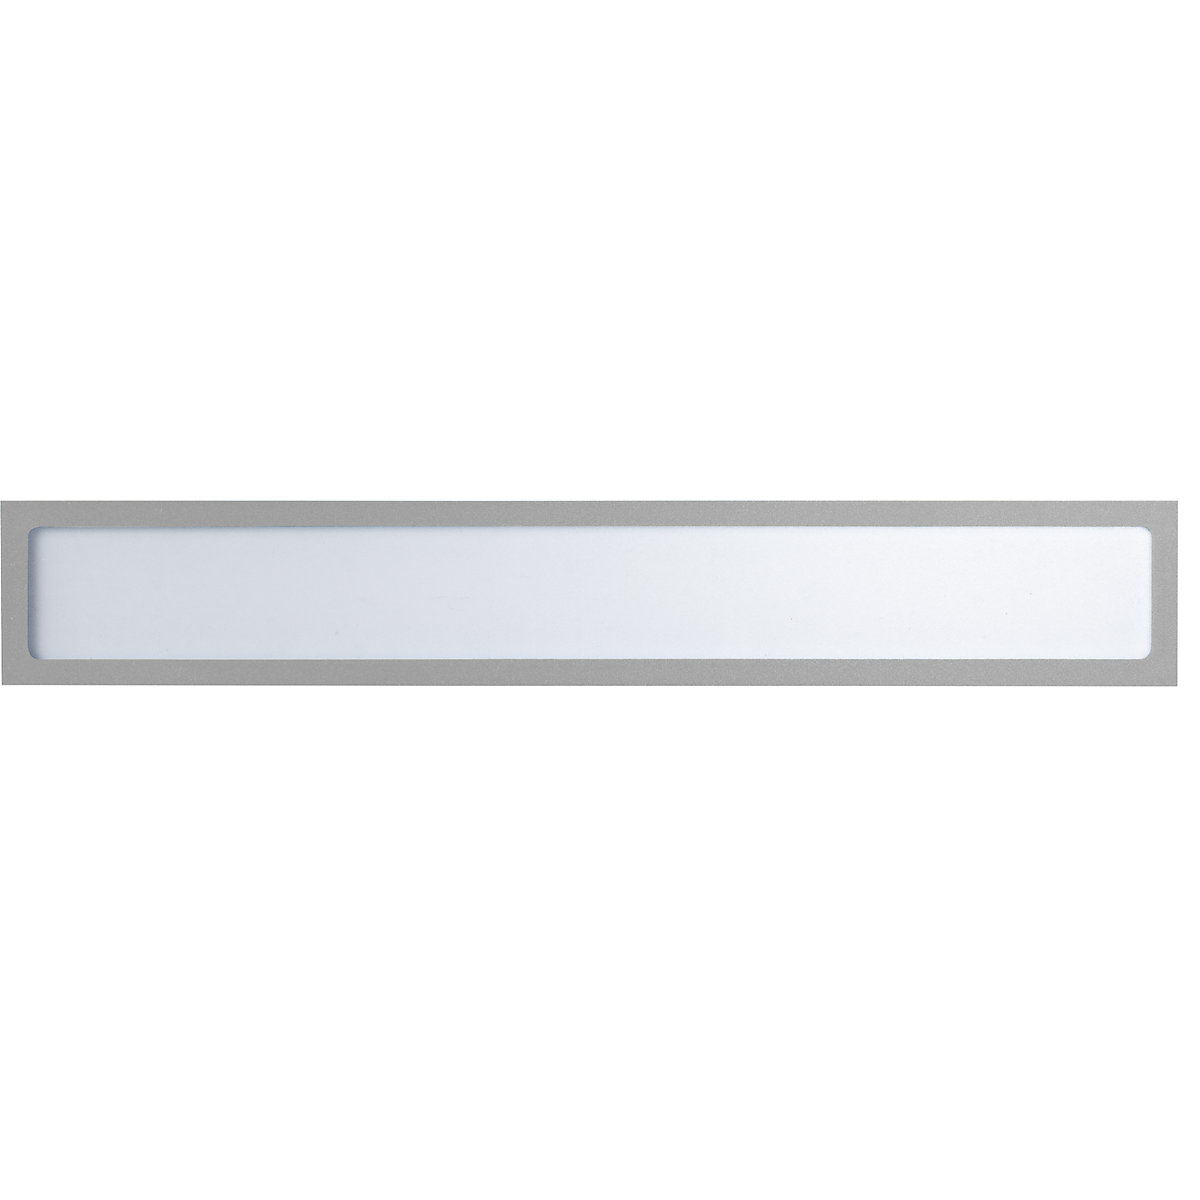 Magnetic display pocket – eurokraft basic, for headings, A3 landscape / A2 portrait, 435 x 60 mm, silver frame, pack of 10-7